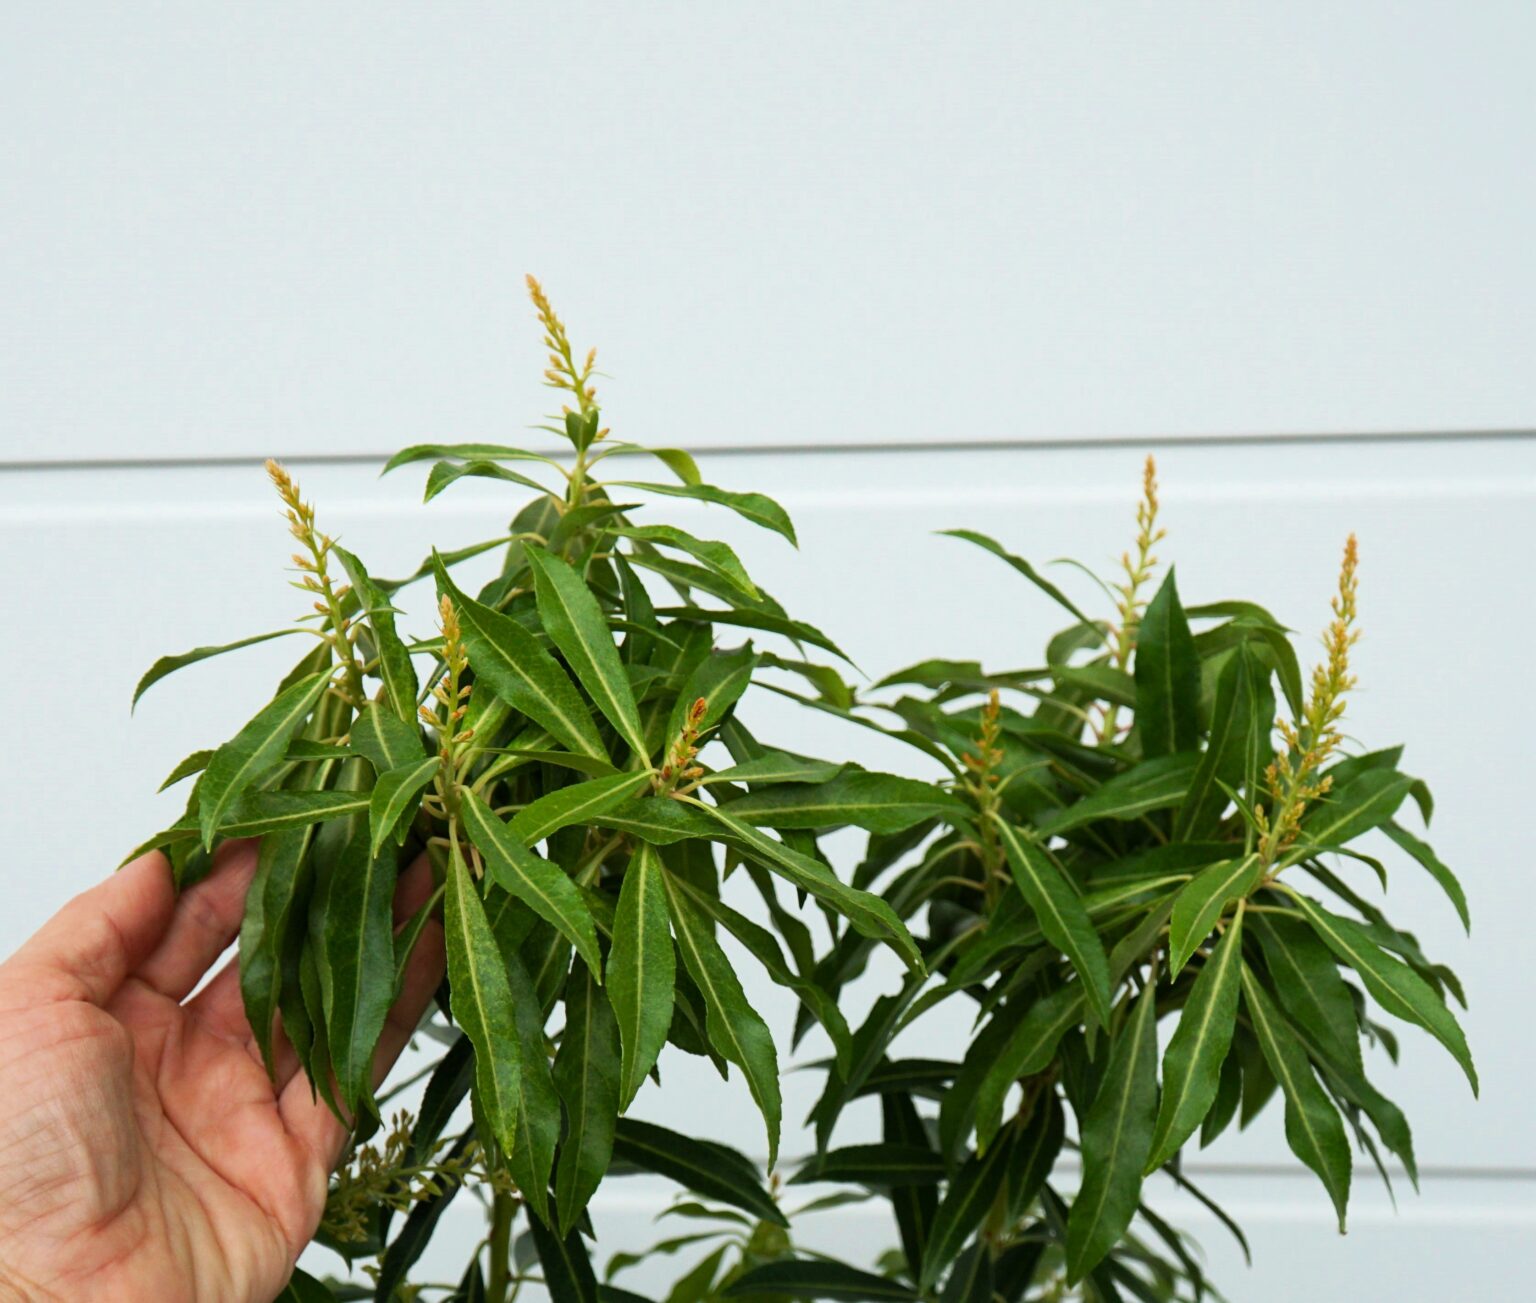 PIERIS JAPOŃSKI FOREST FLAME Pieris japonica